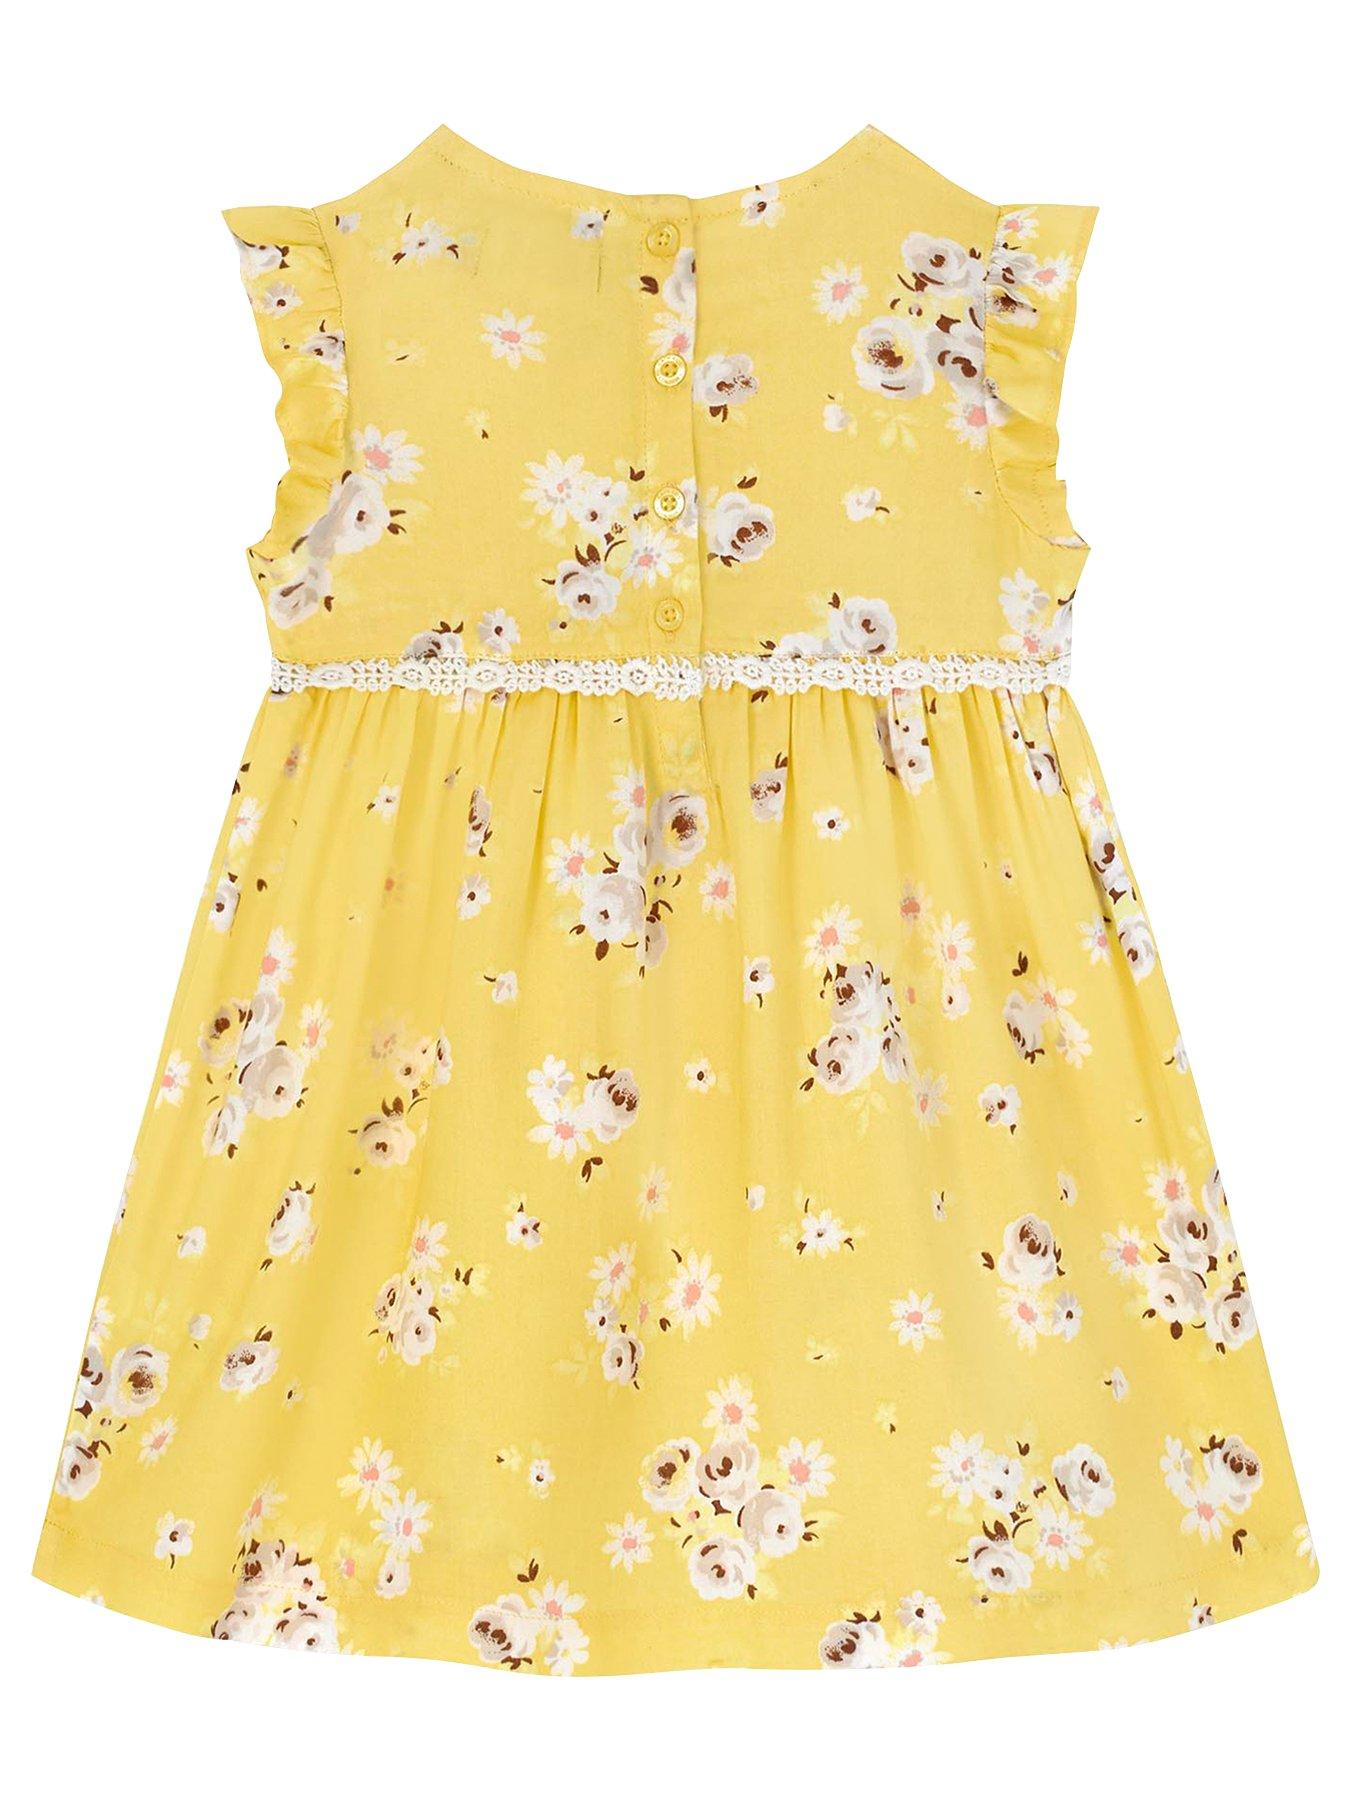 cath kidston yellow dress